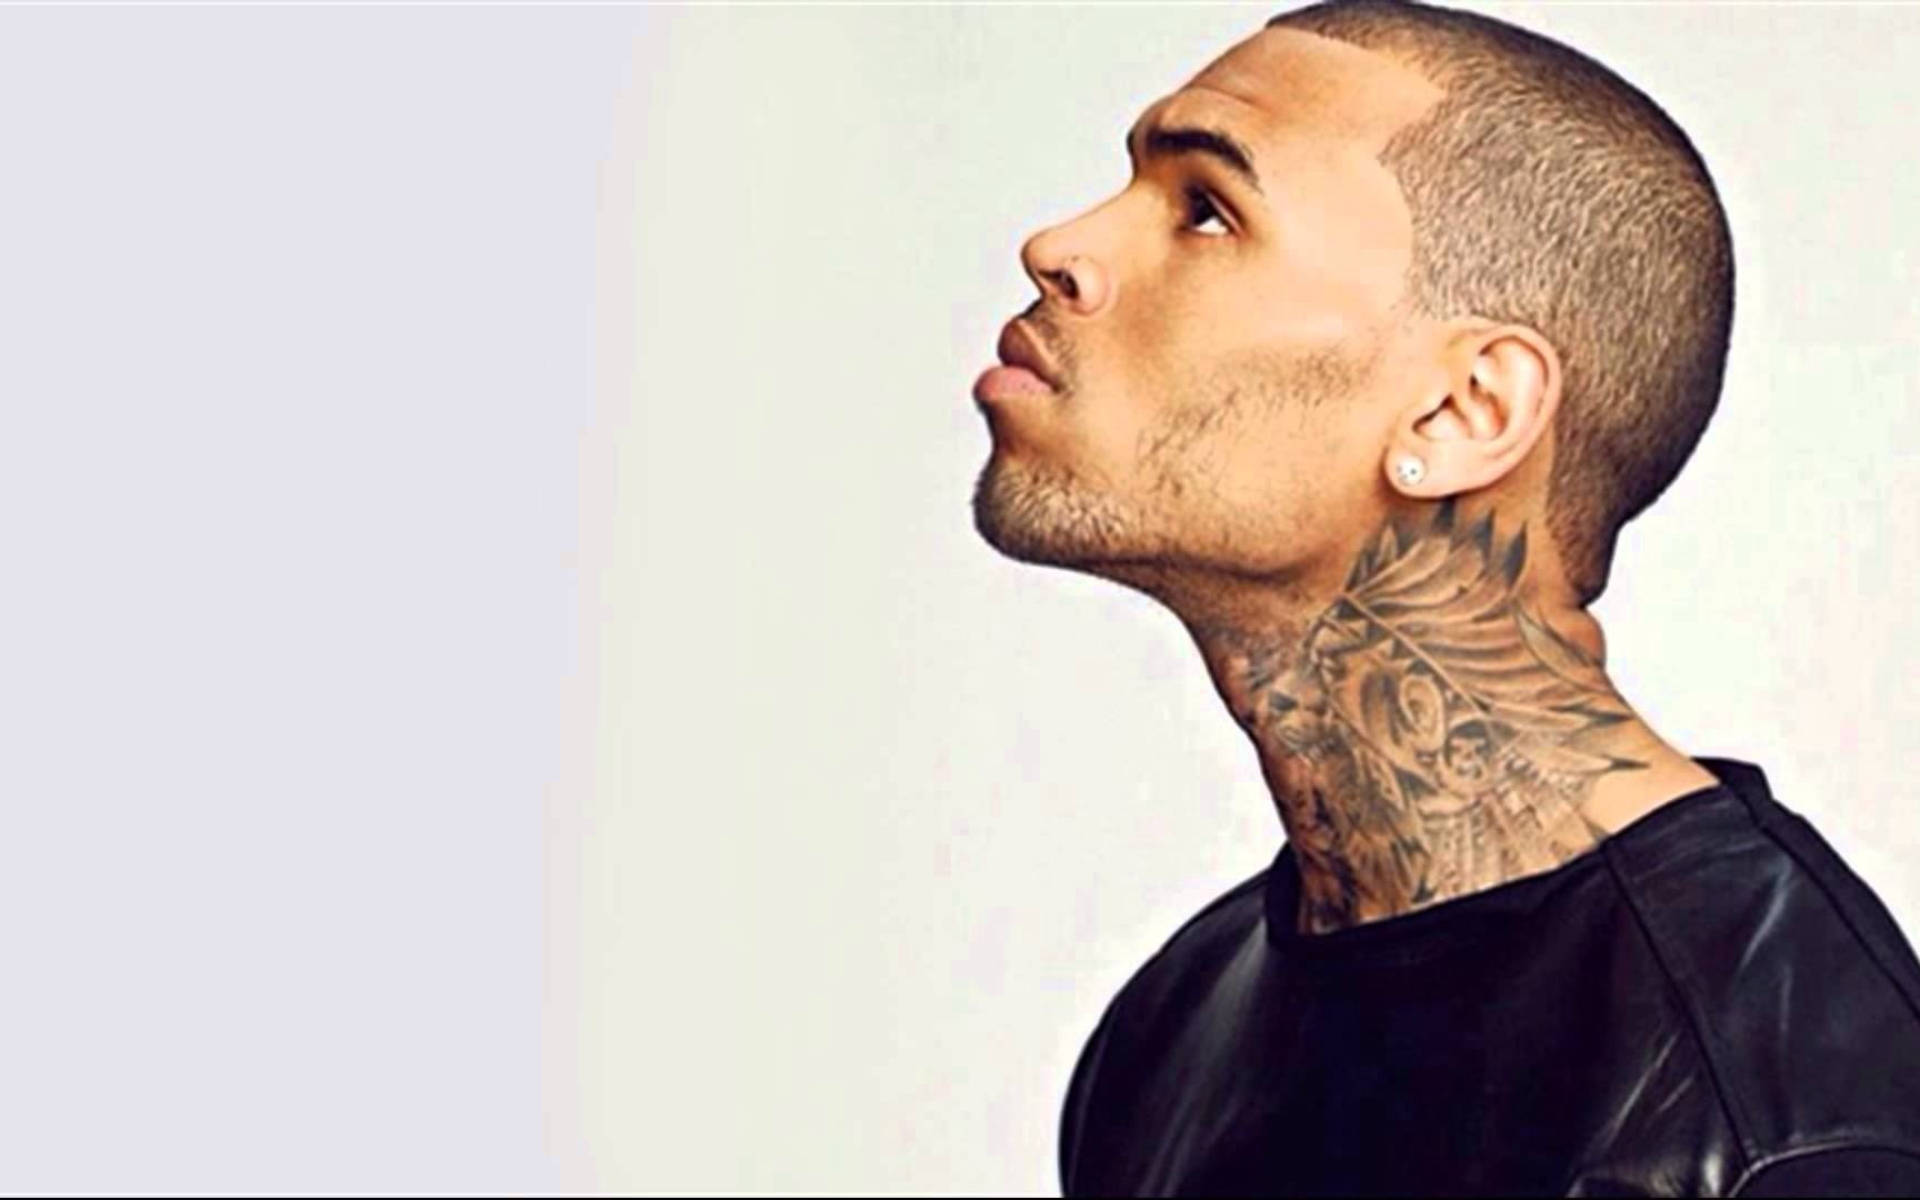 Chris Brown Side Profile